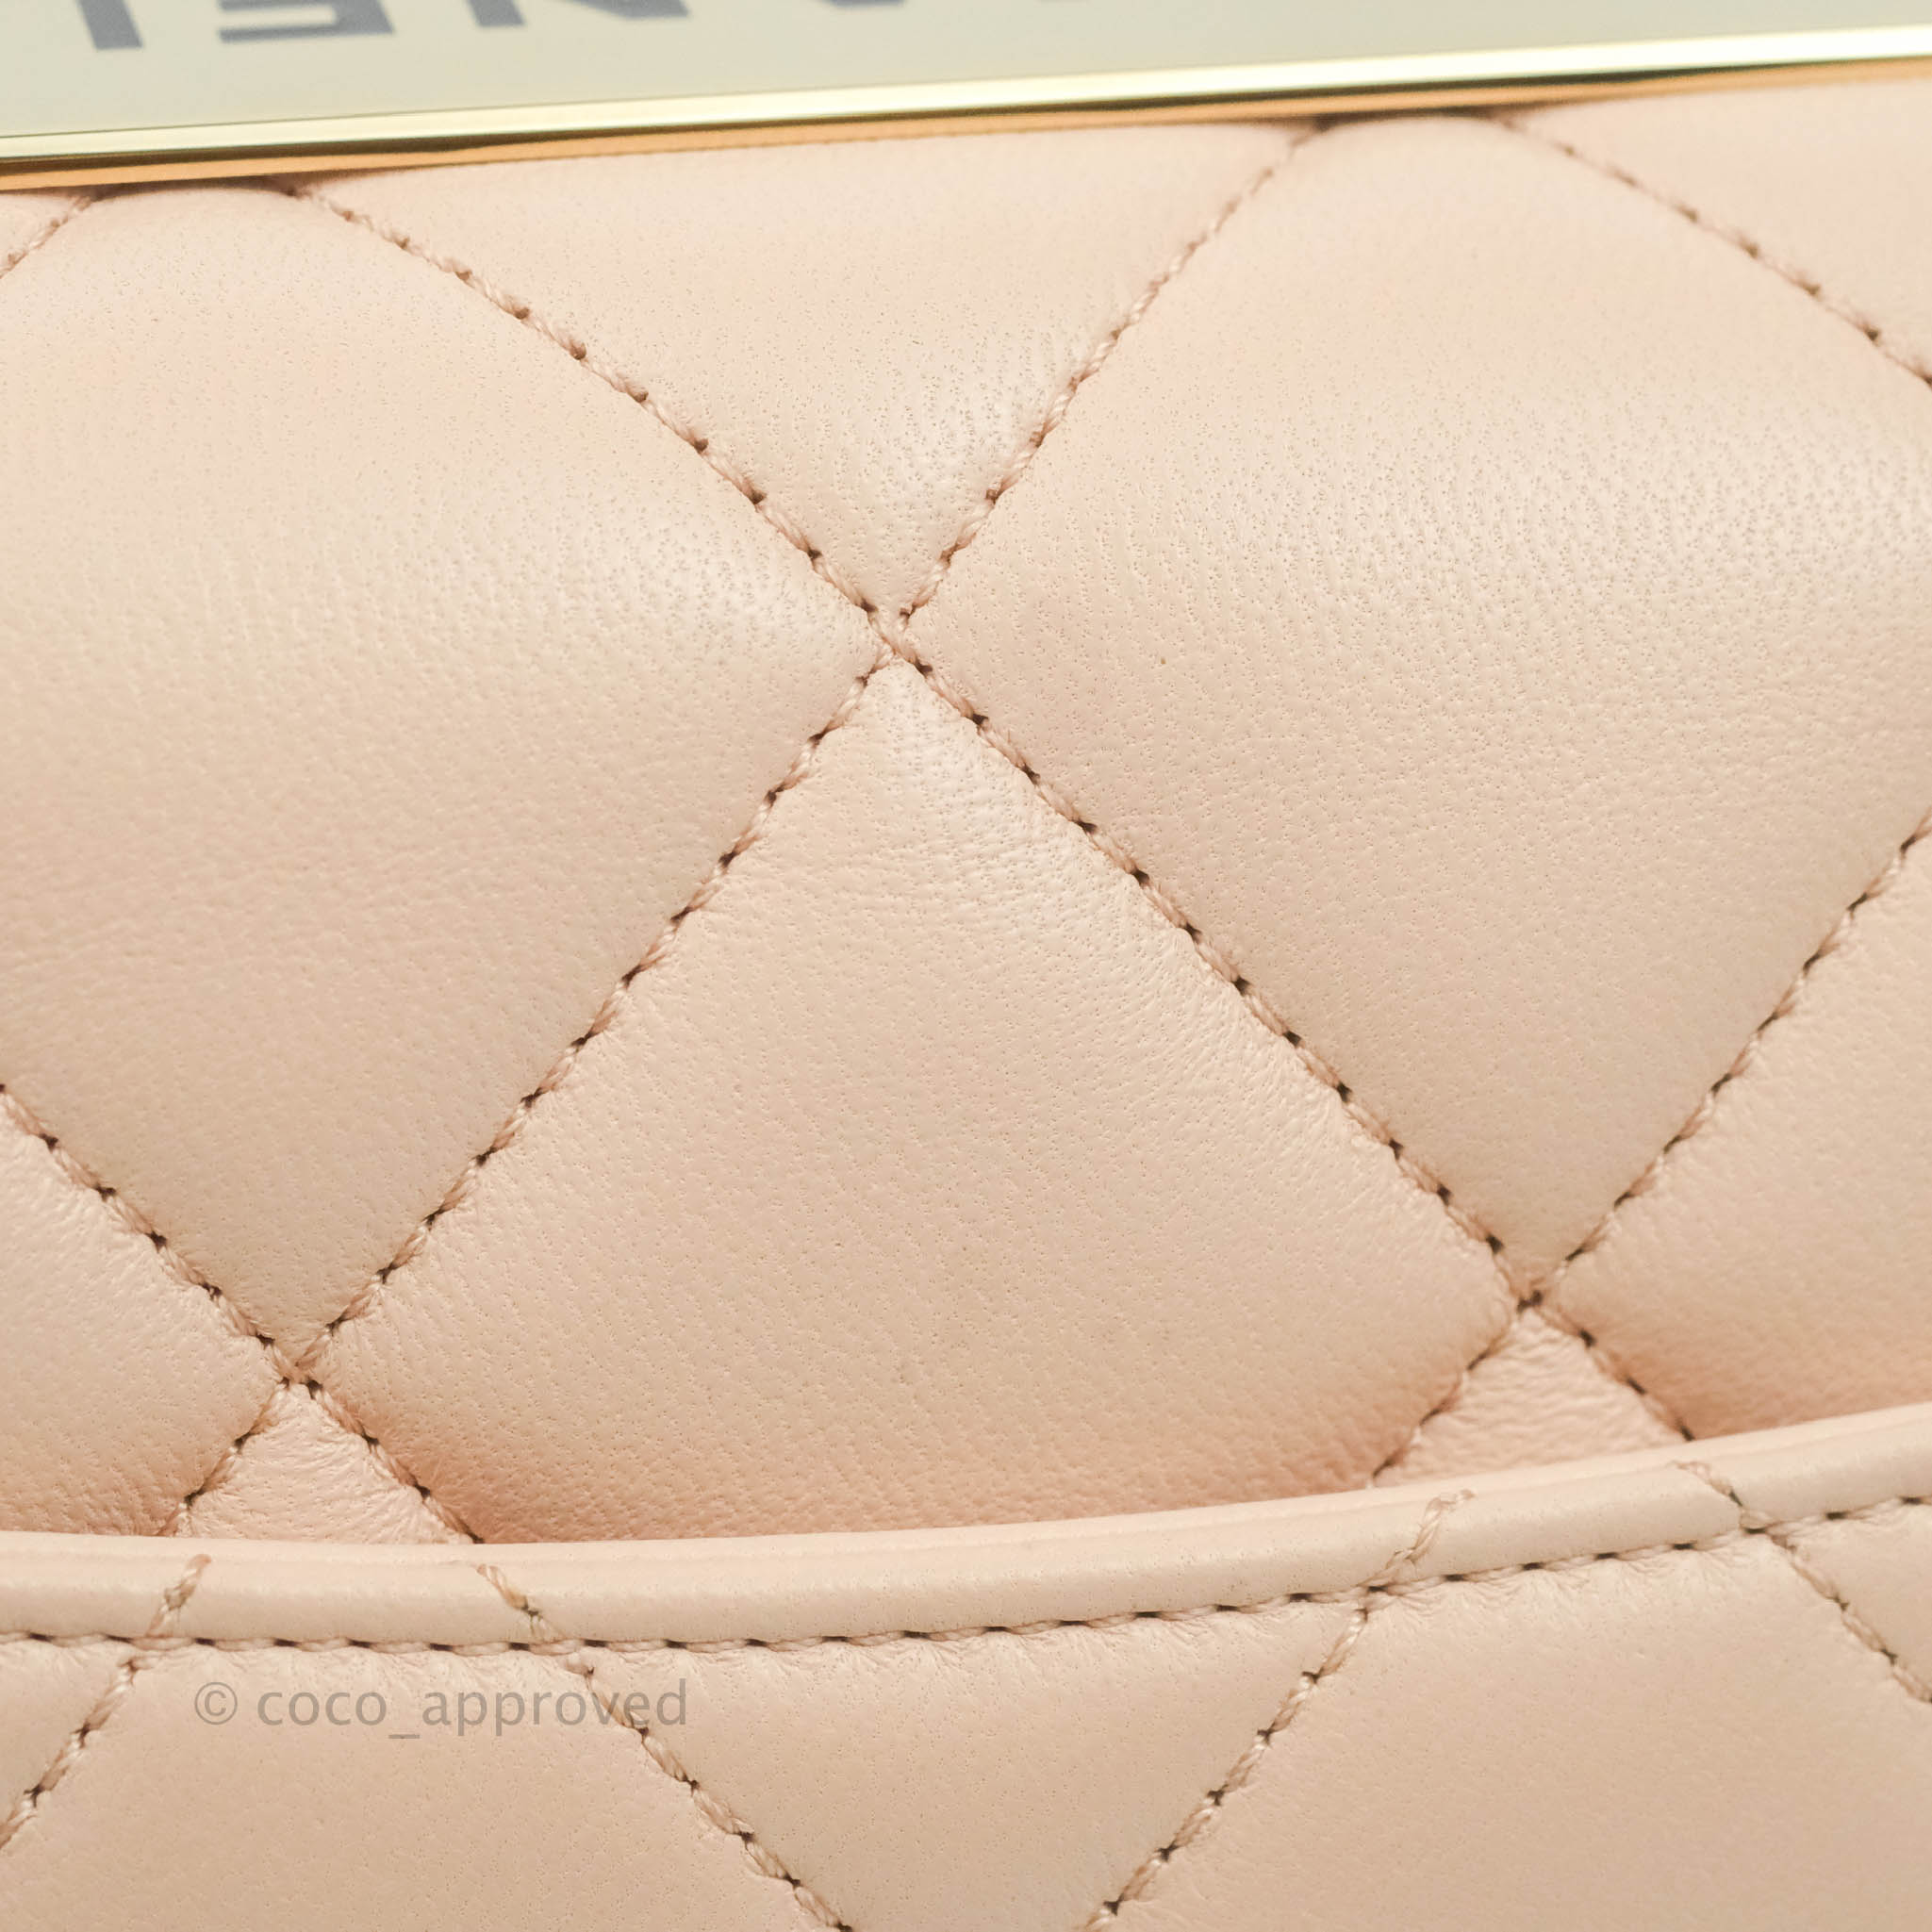 CHANEL Trendy CC Bag Medium Pink Lambskin with Light Gold Hardware